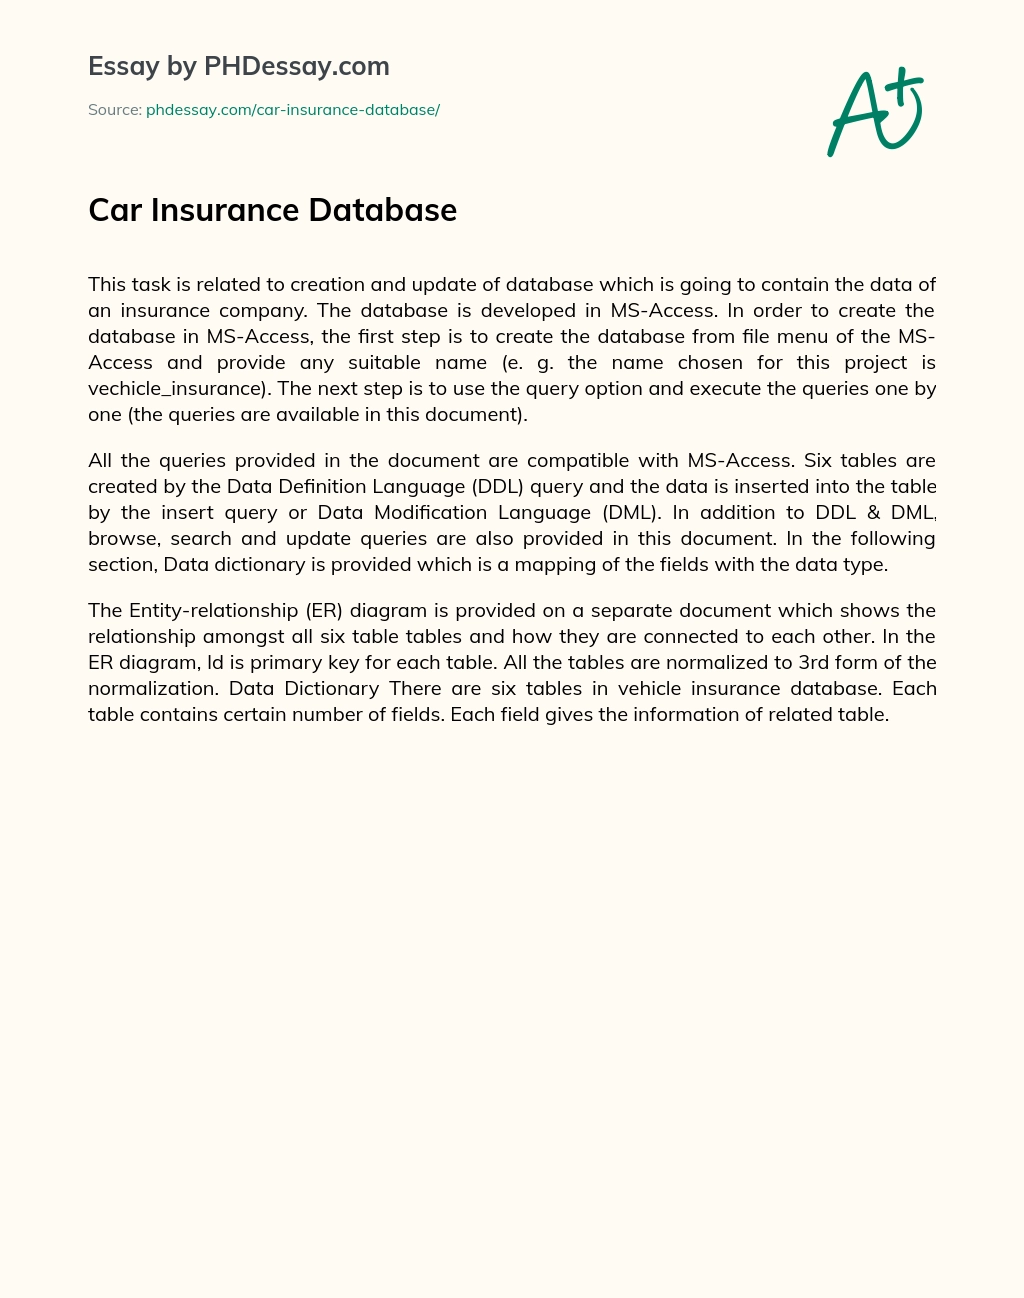 Car Insurance Database essay